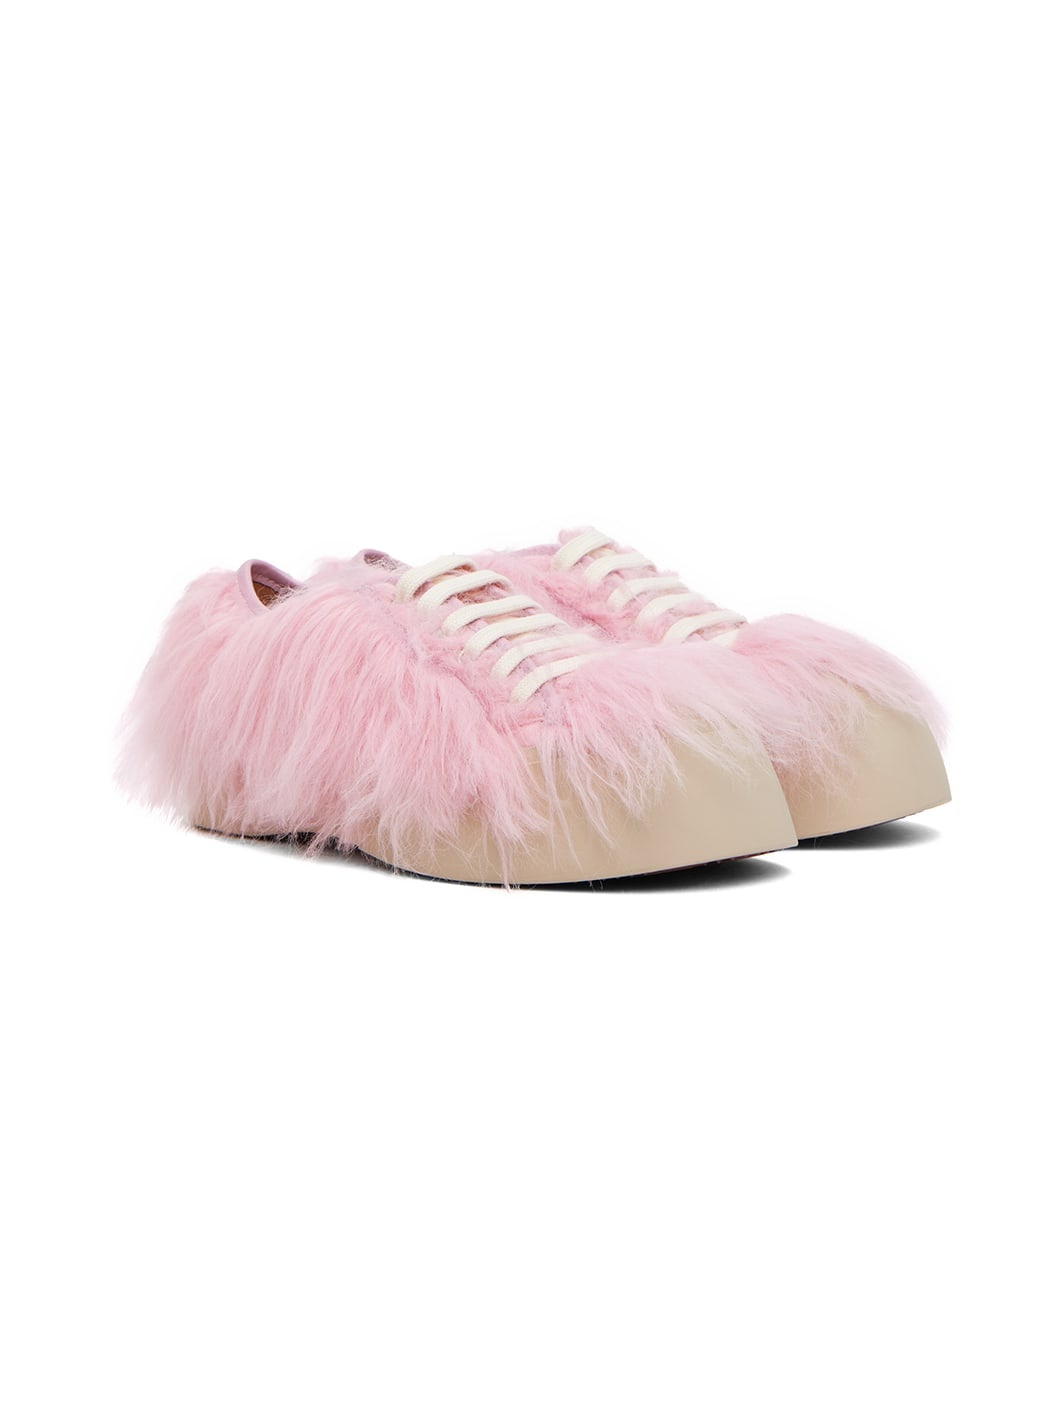 SSENSE Exclusive Pink Pablo Sneakers - 4